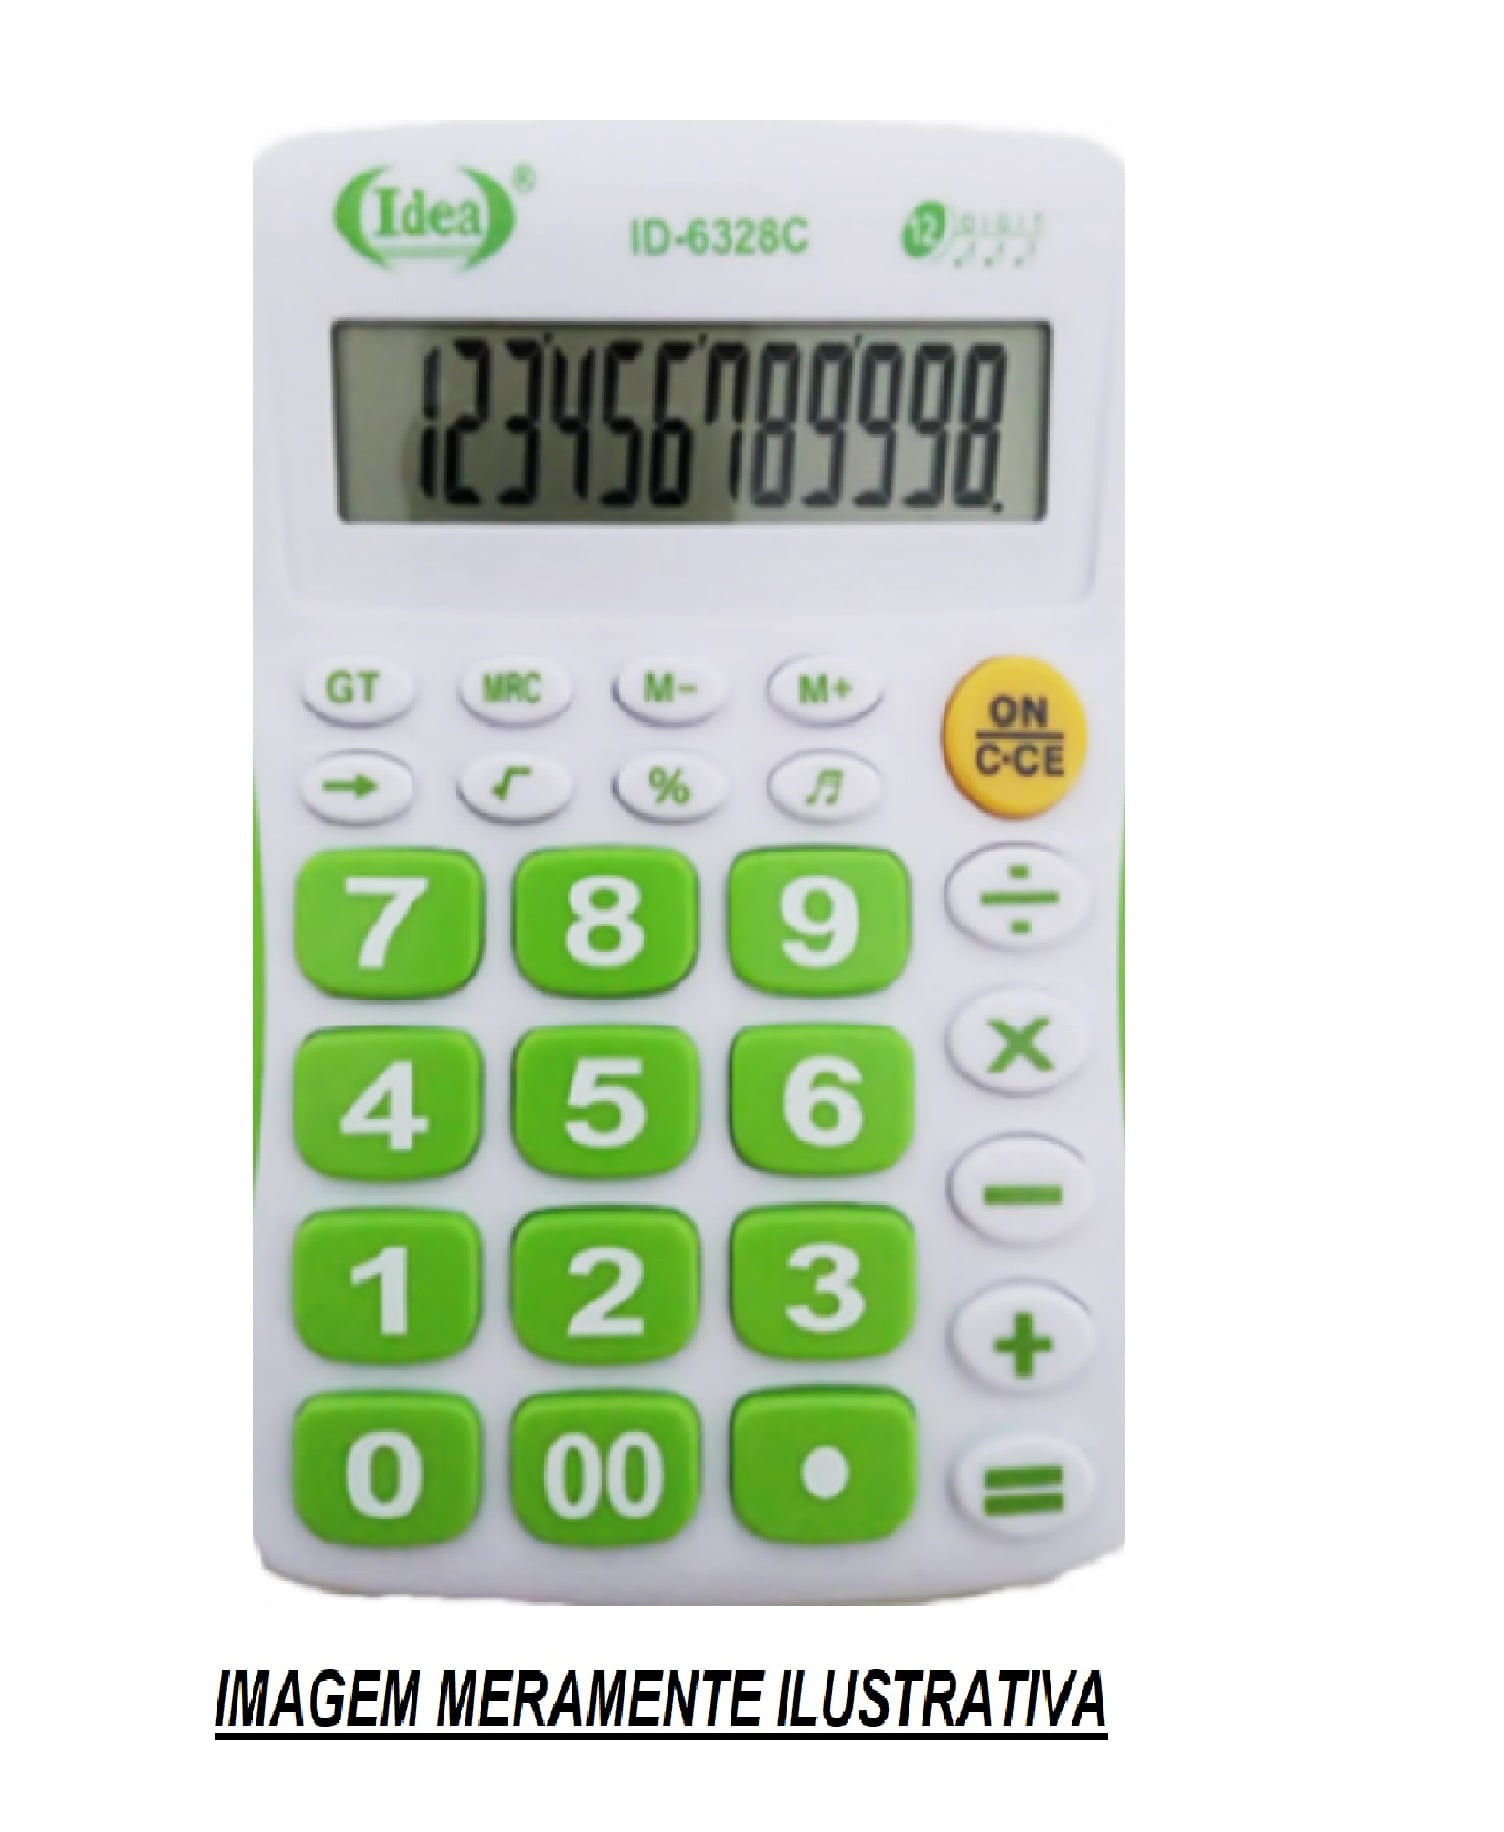 Calculadora Idea de 12 dígitos - Verde - ID-6328C Ver Produto